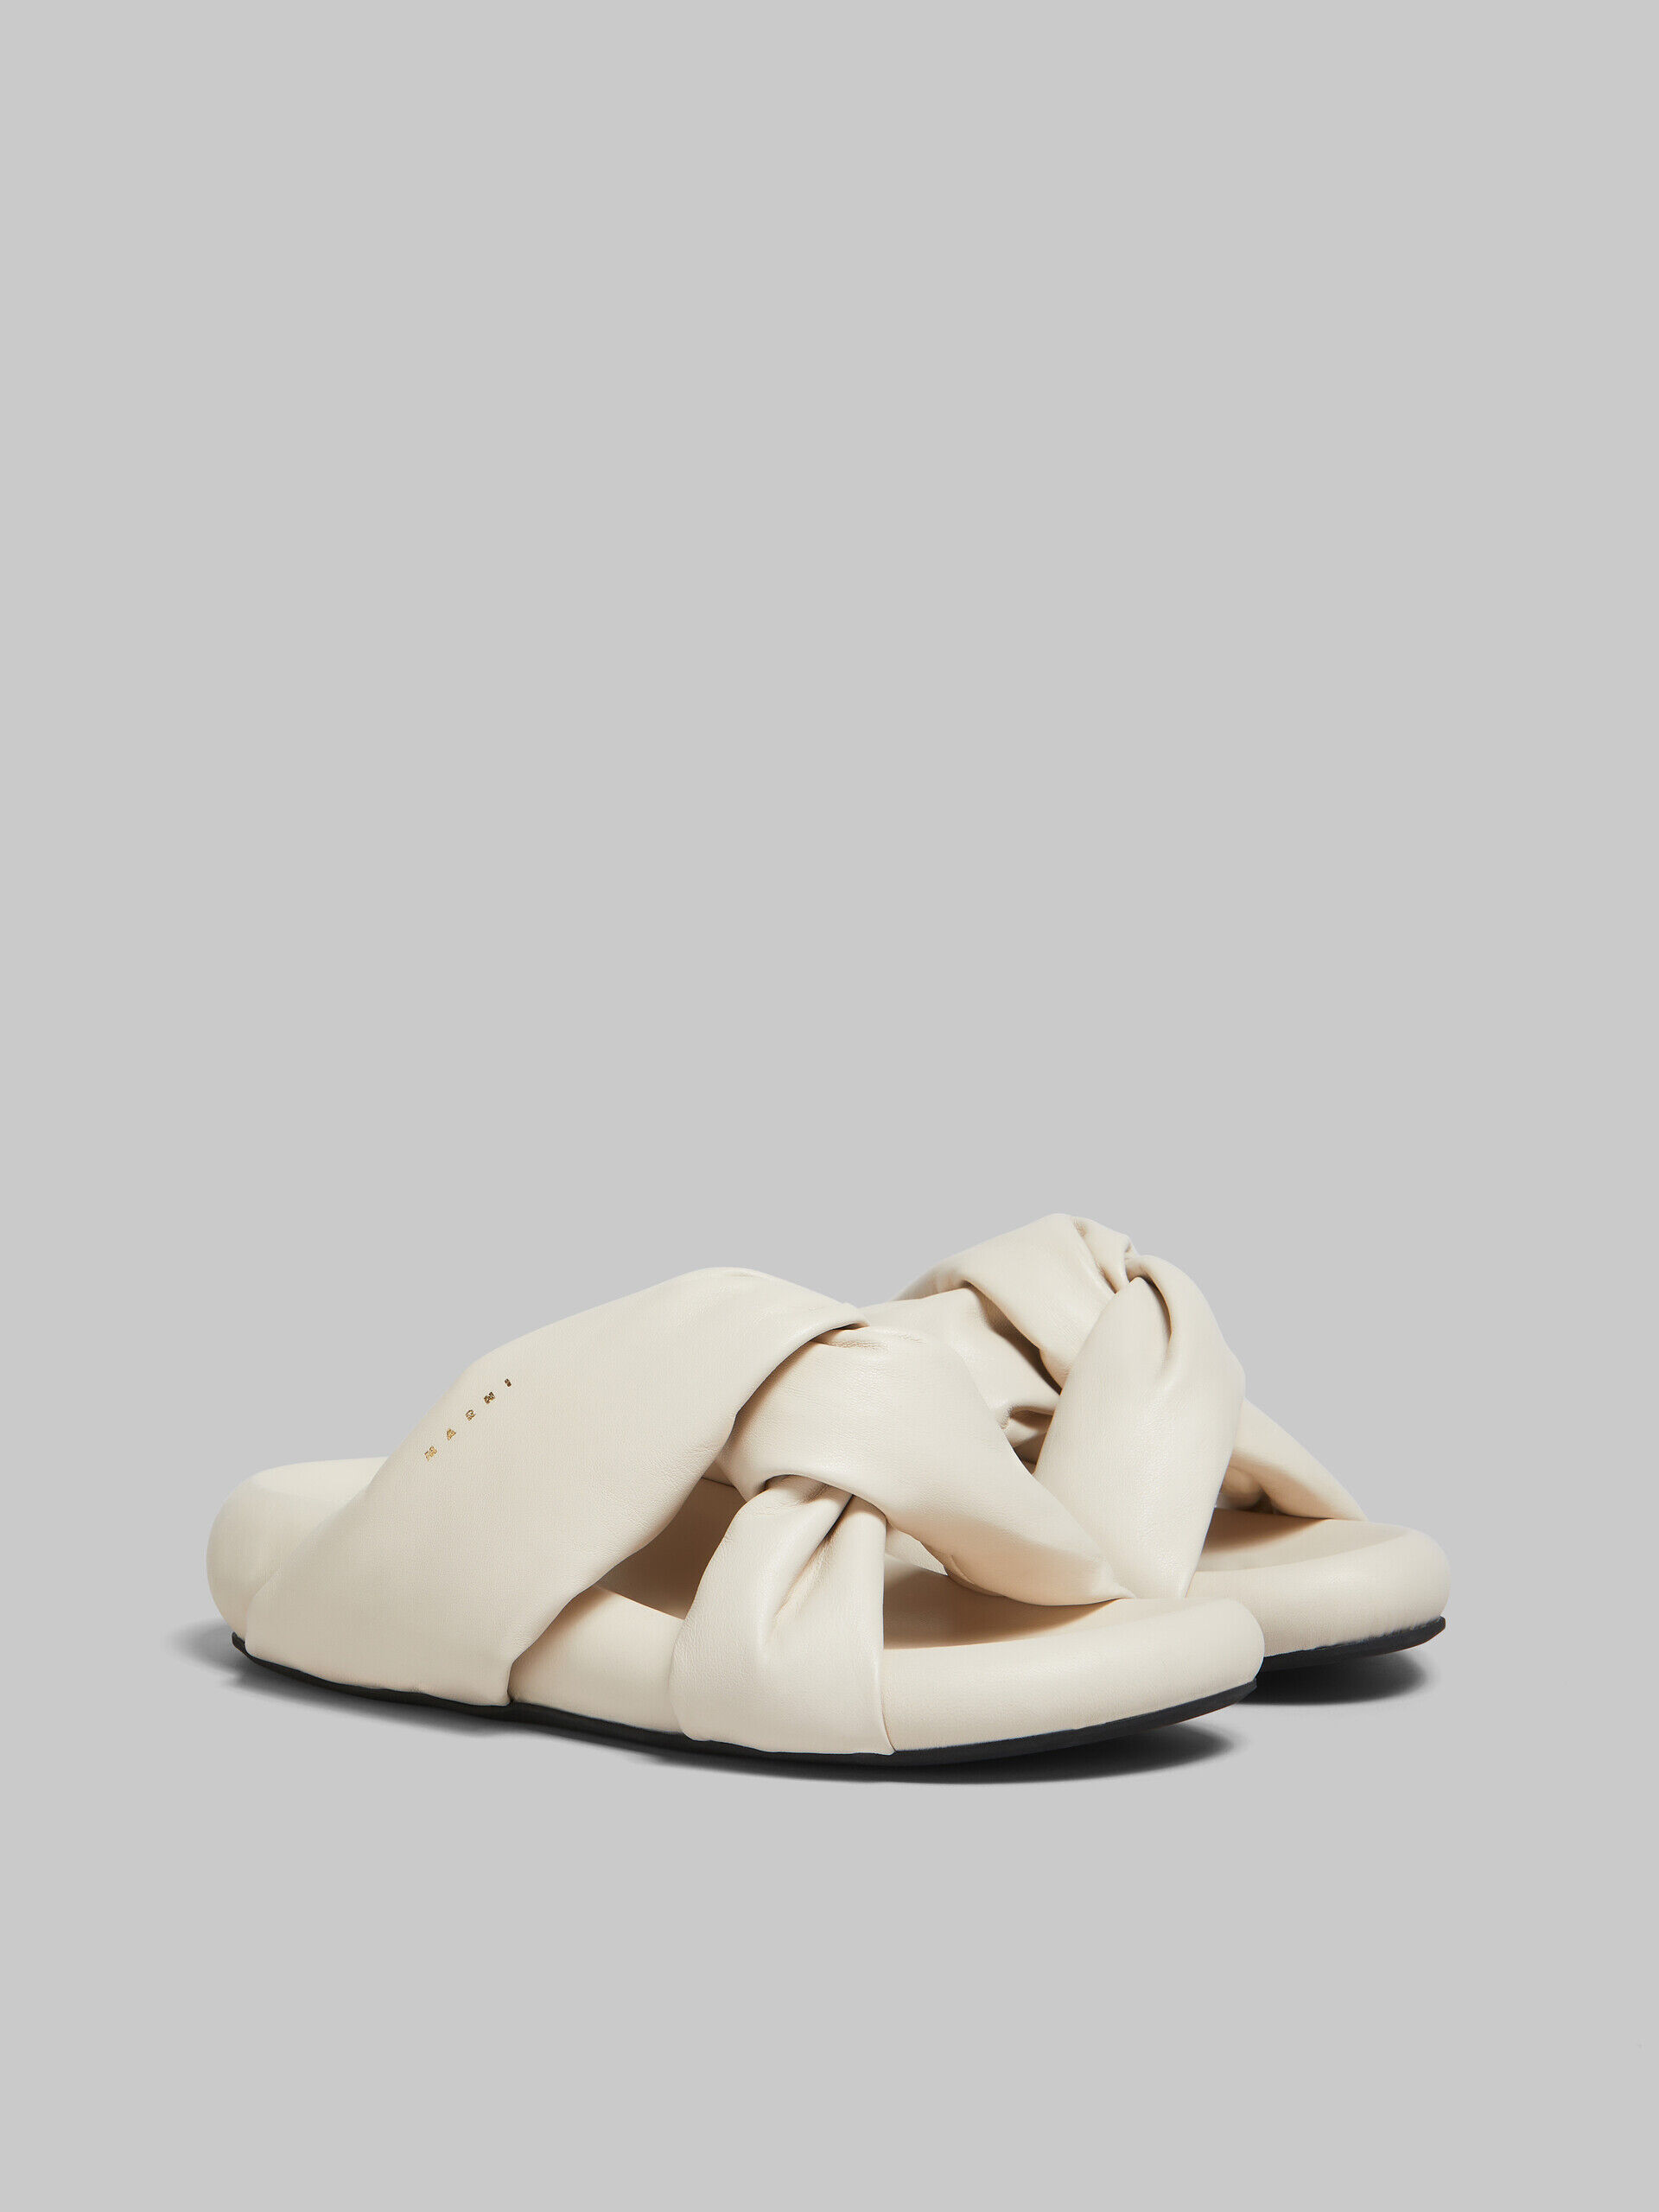 Ivory twisted leather Bubble sandal | Marni